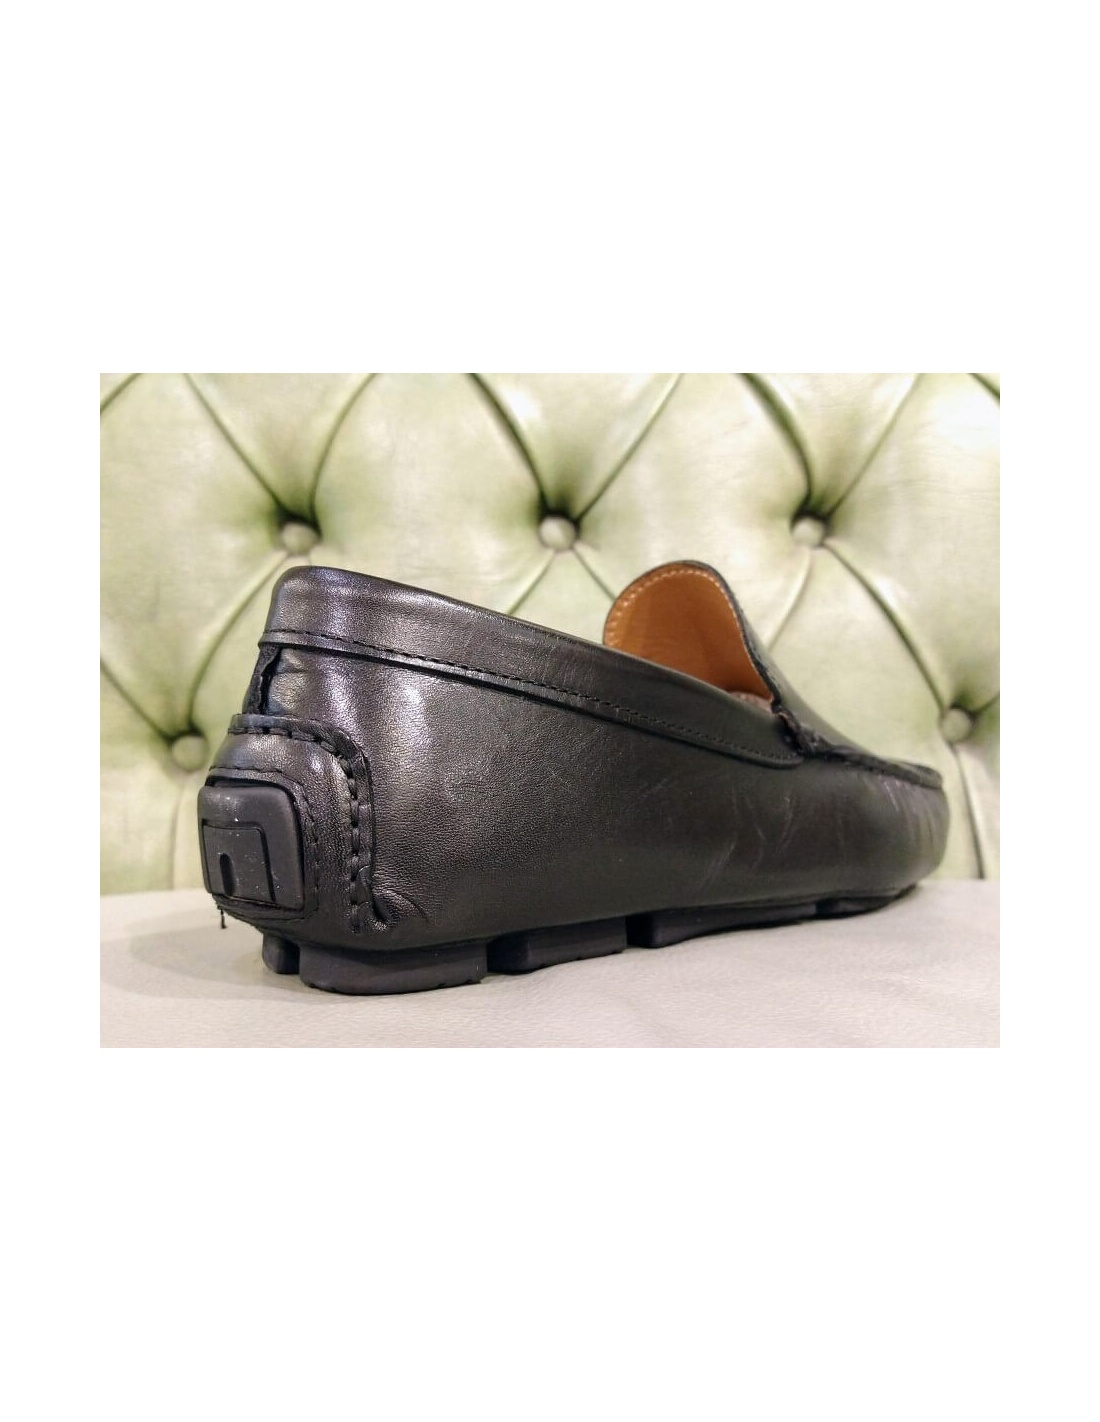 LV premium quality loafers